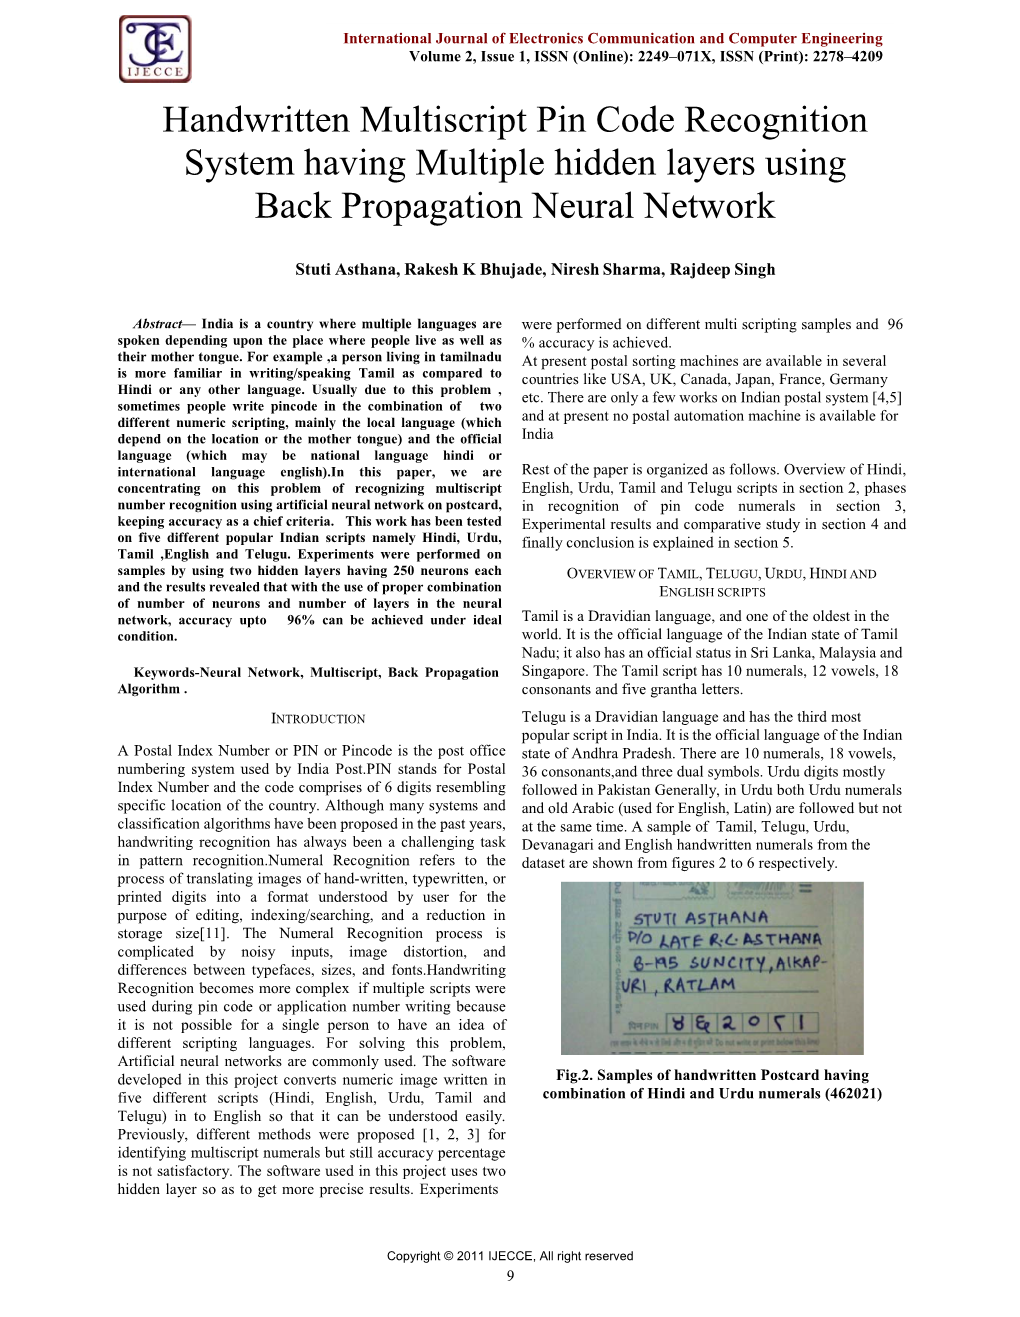 Handwritten Multiscript Pin Code Recognition System Having Multiple Hidden Layers Using Back Propagation Neural Network